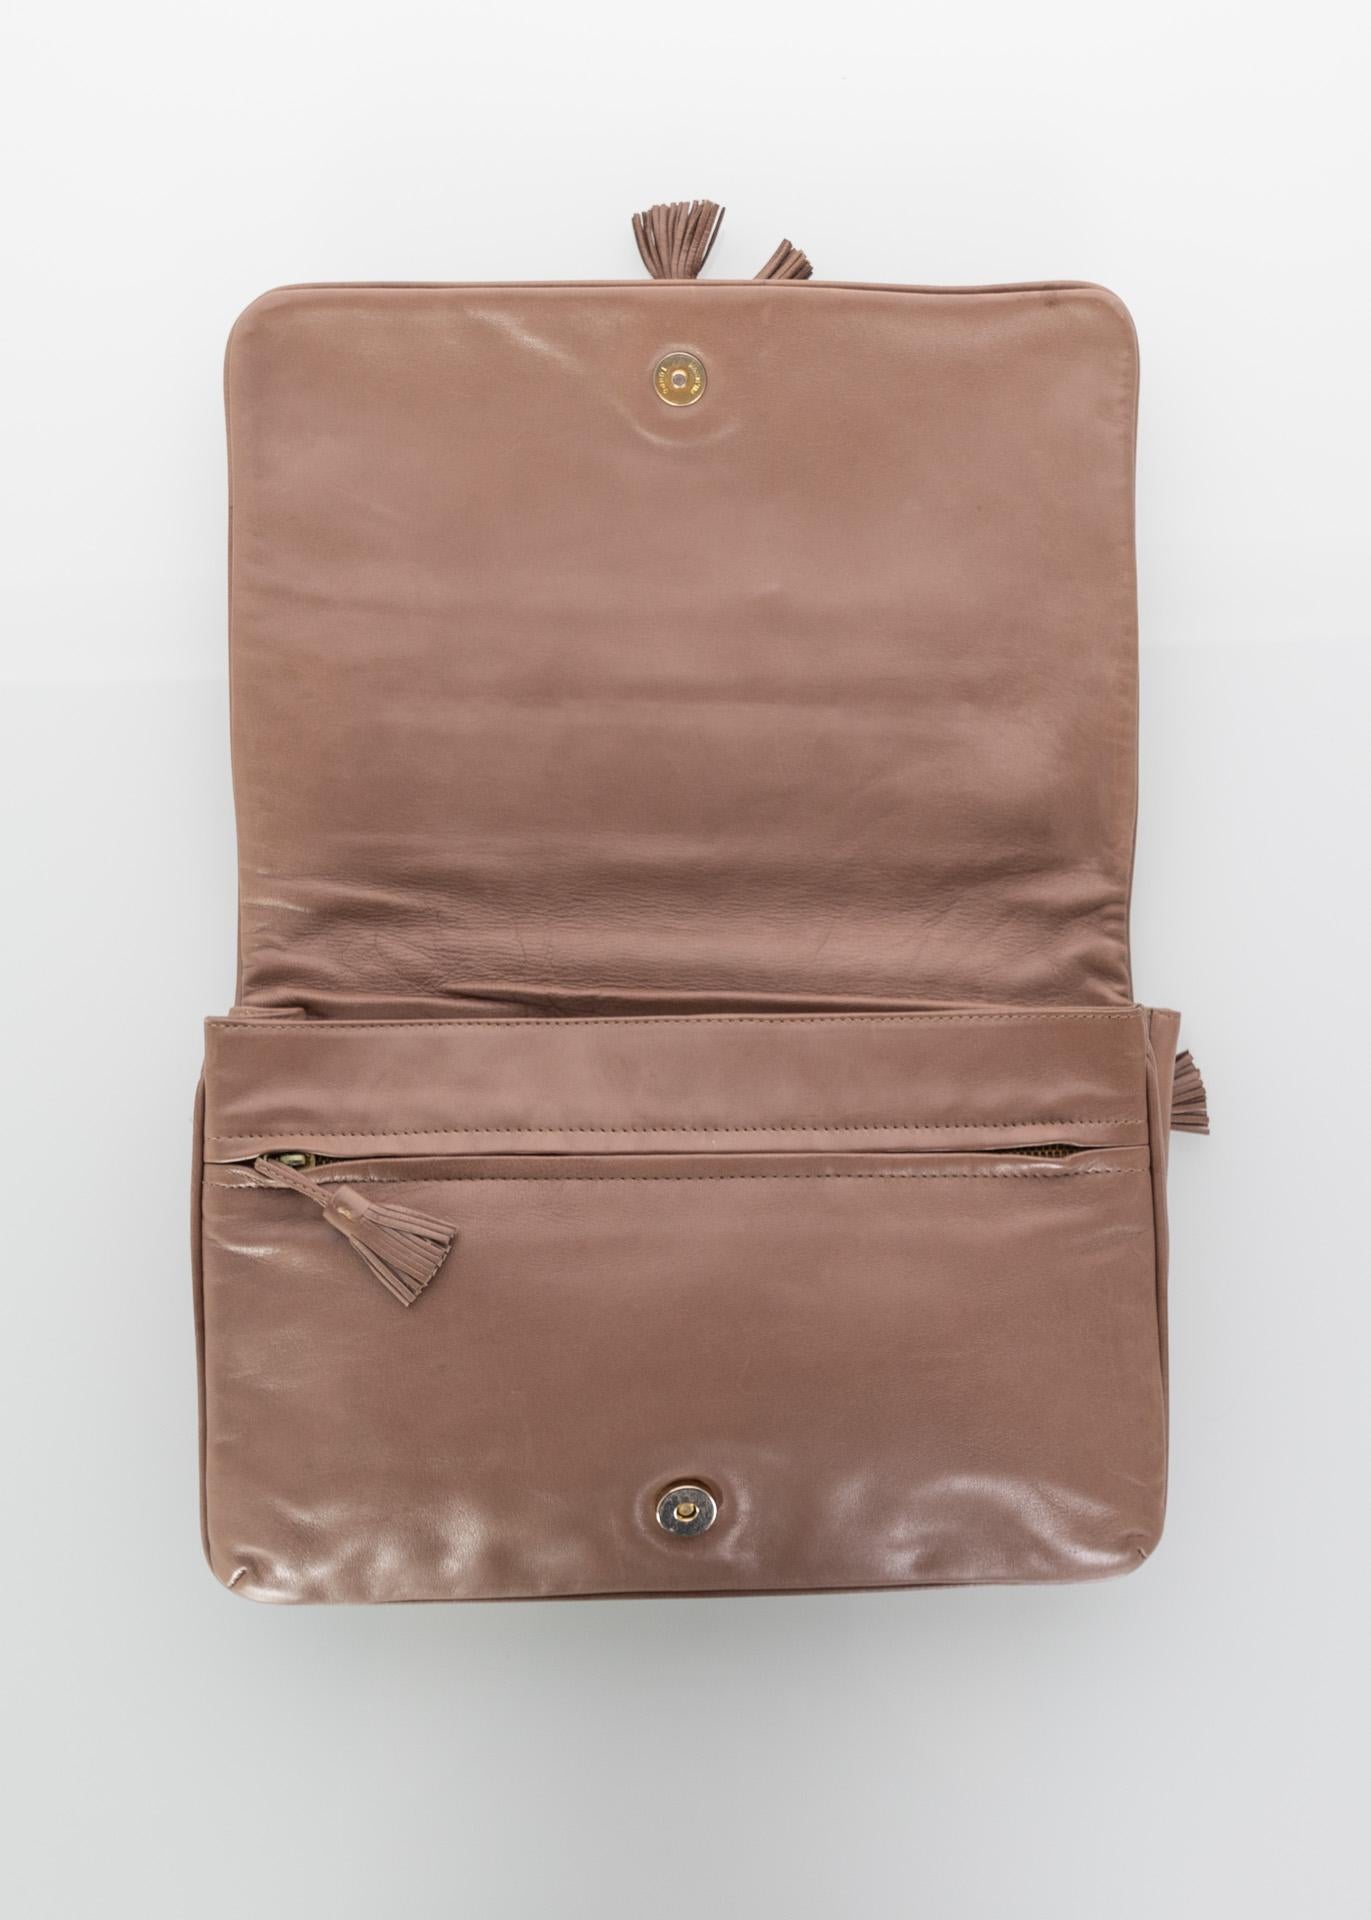 Brown Vintage Bottega Veneta  Intrecciato Leather Tassel Clutch Bag